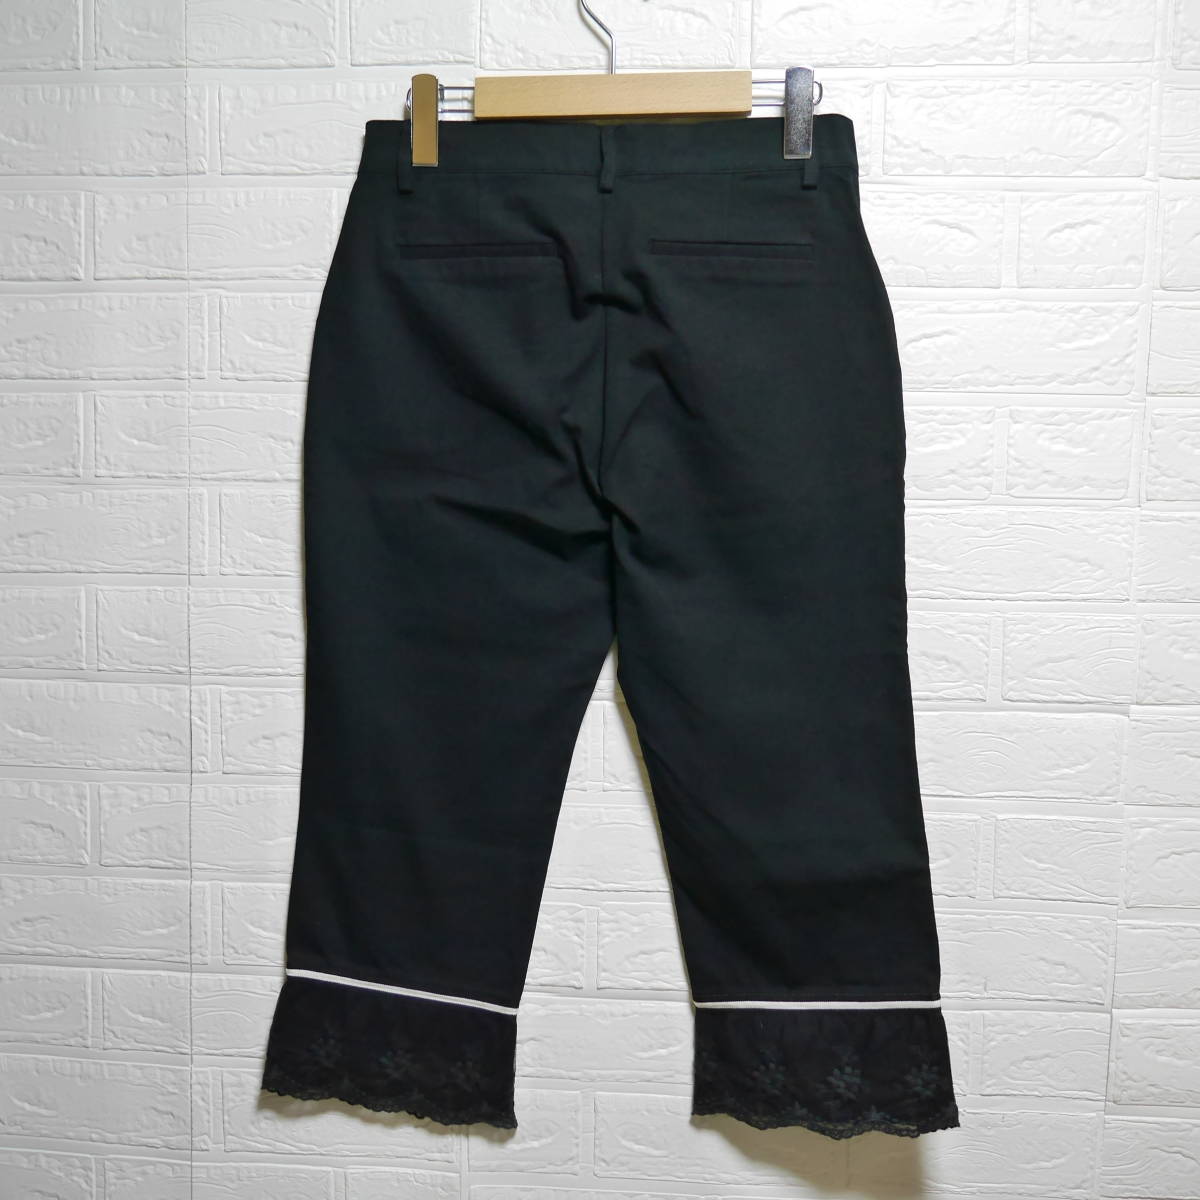 A502 * MALIANI | Mali a-ni capri pants black used size 11